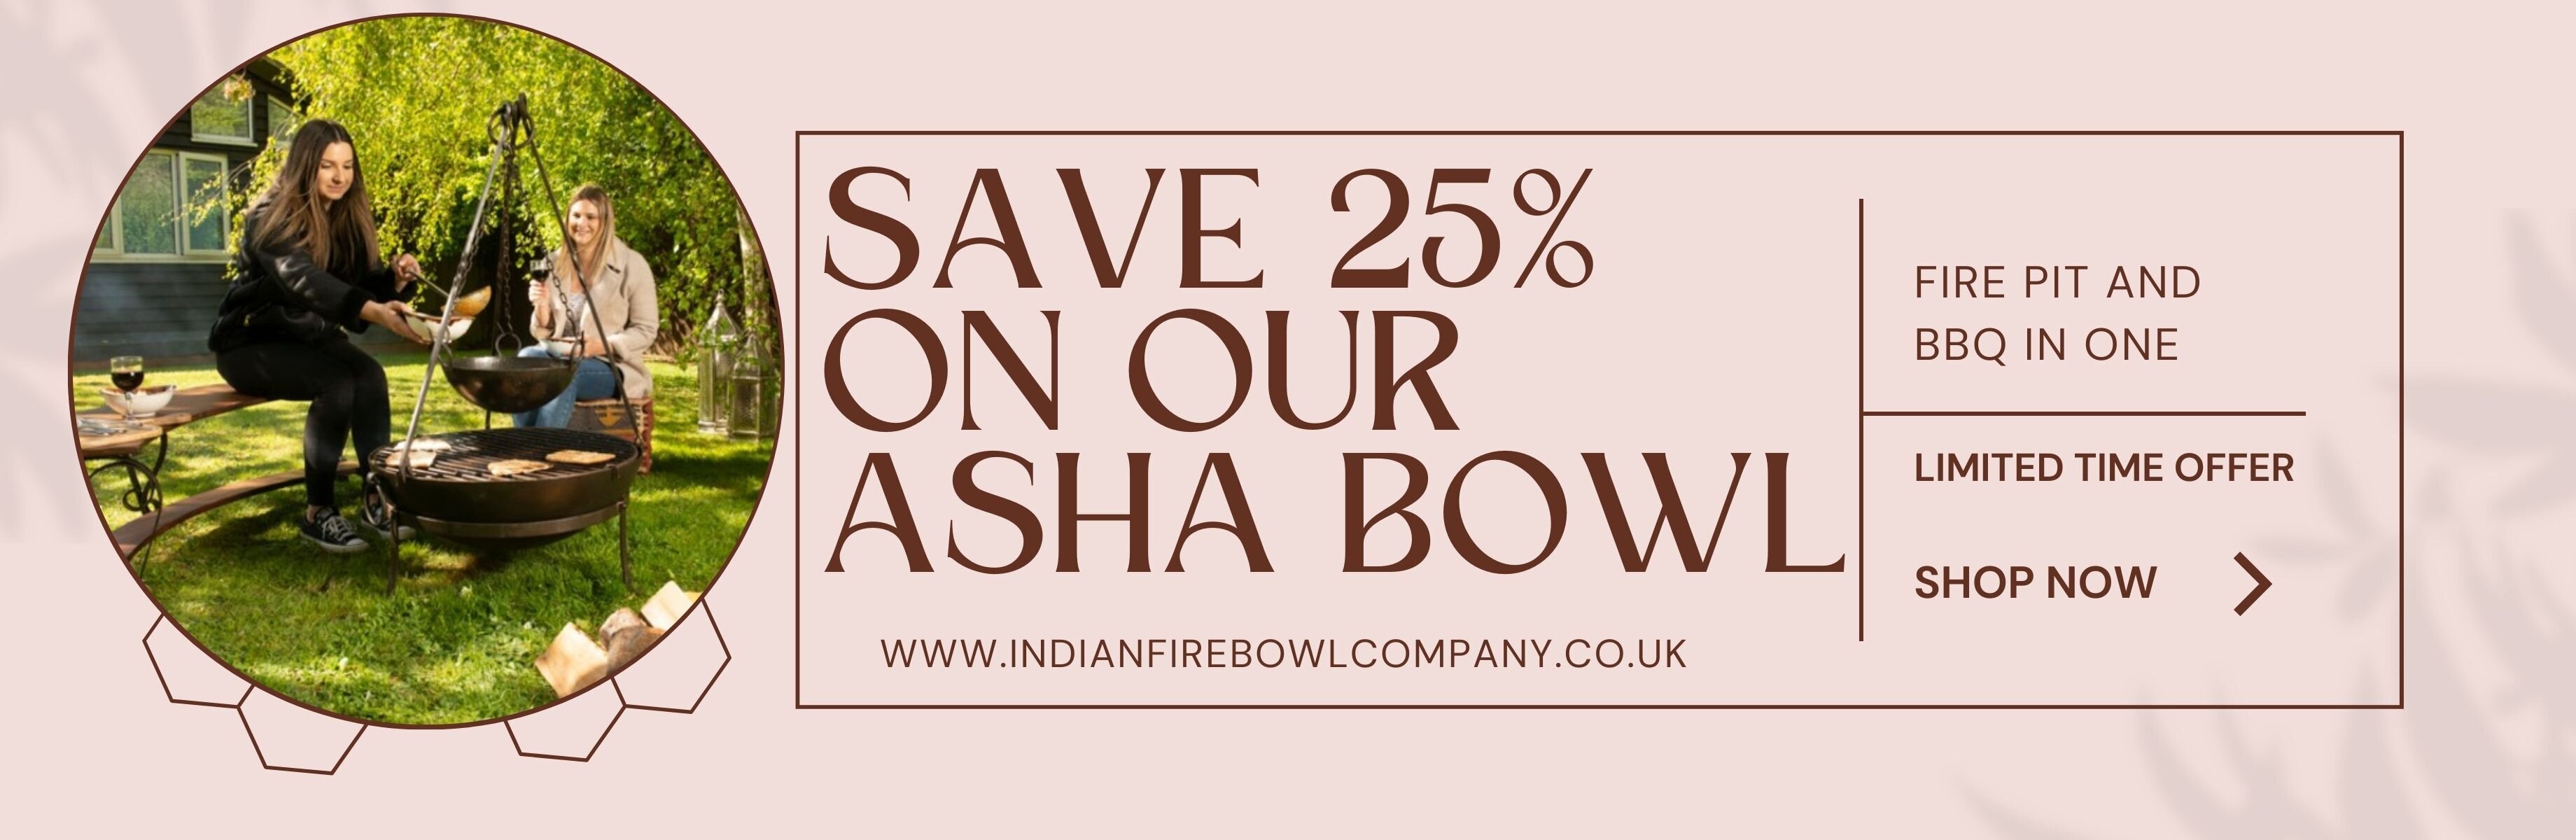 Asha bowl